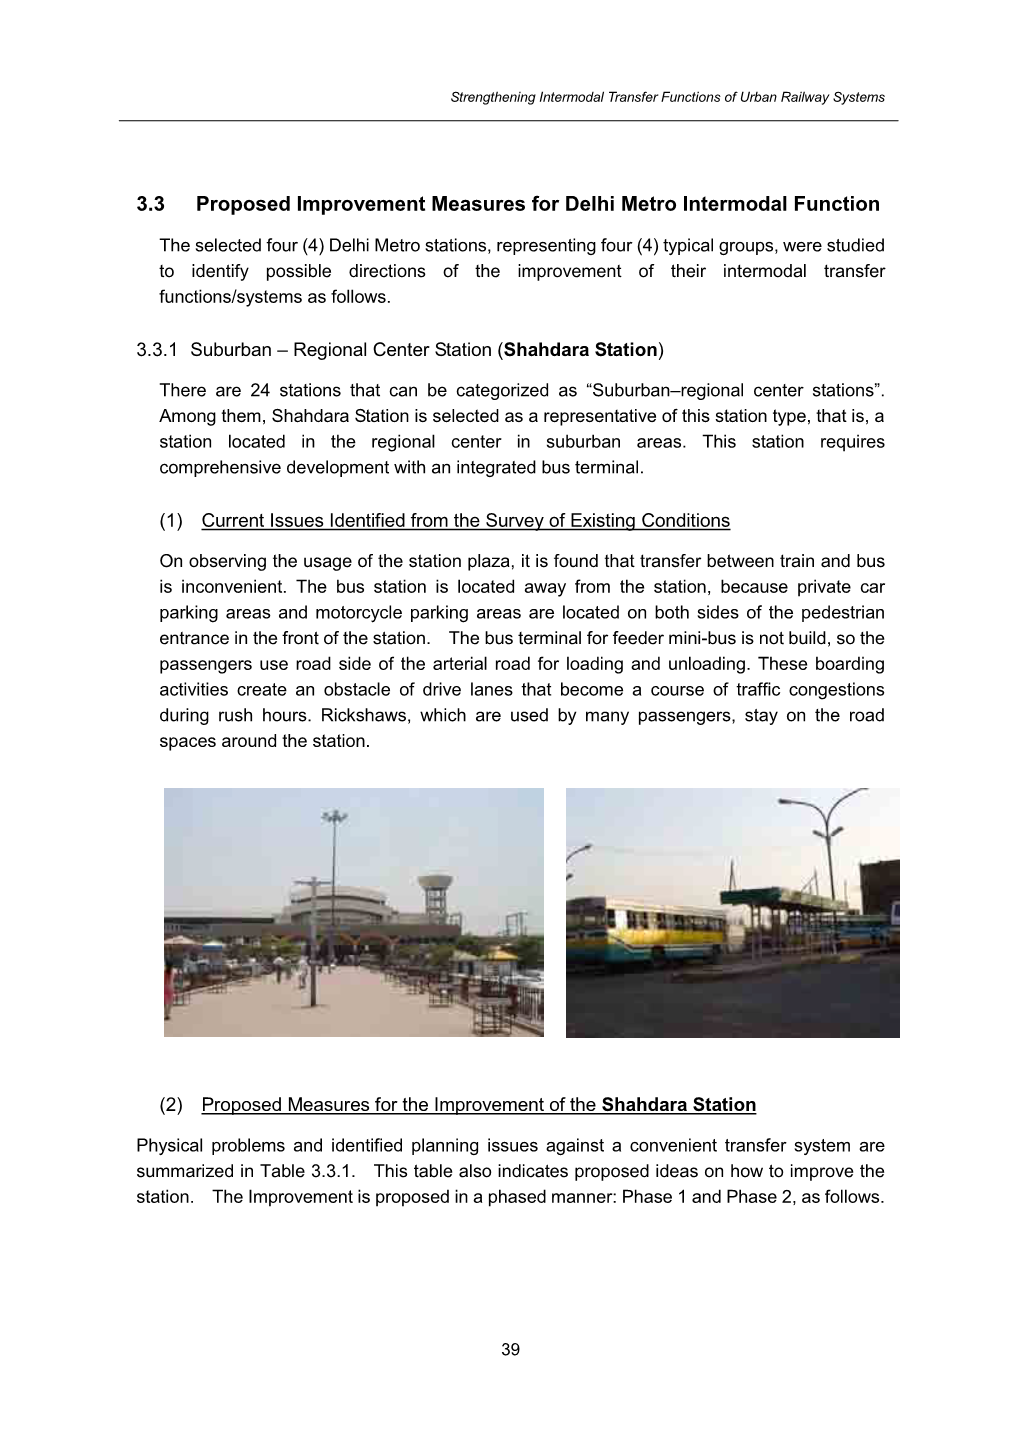 3.3 Proposed Improvement Measures for Delhi Metro Intermodal Function